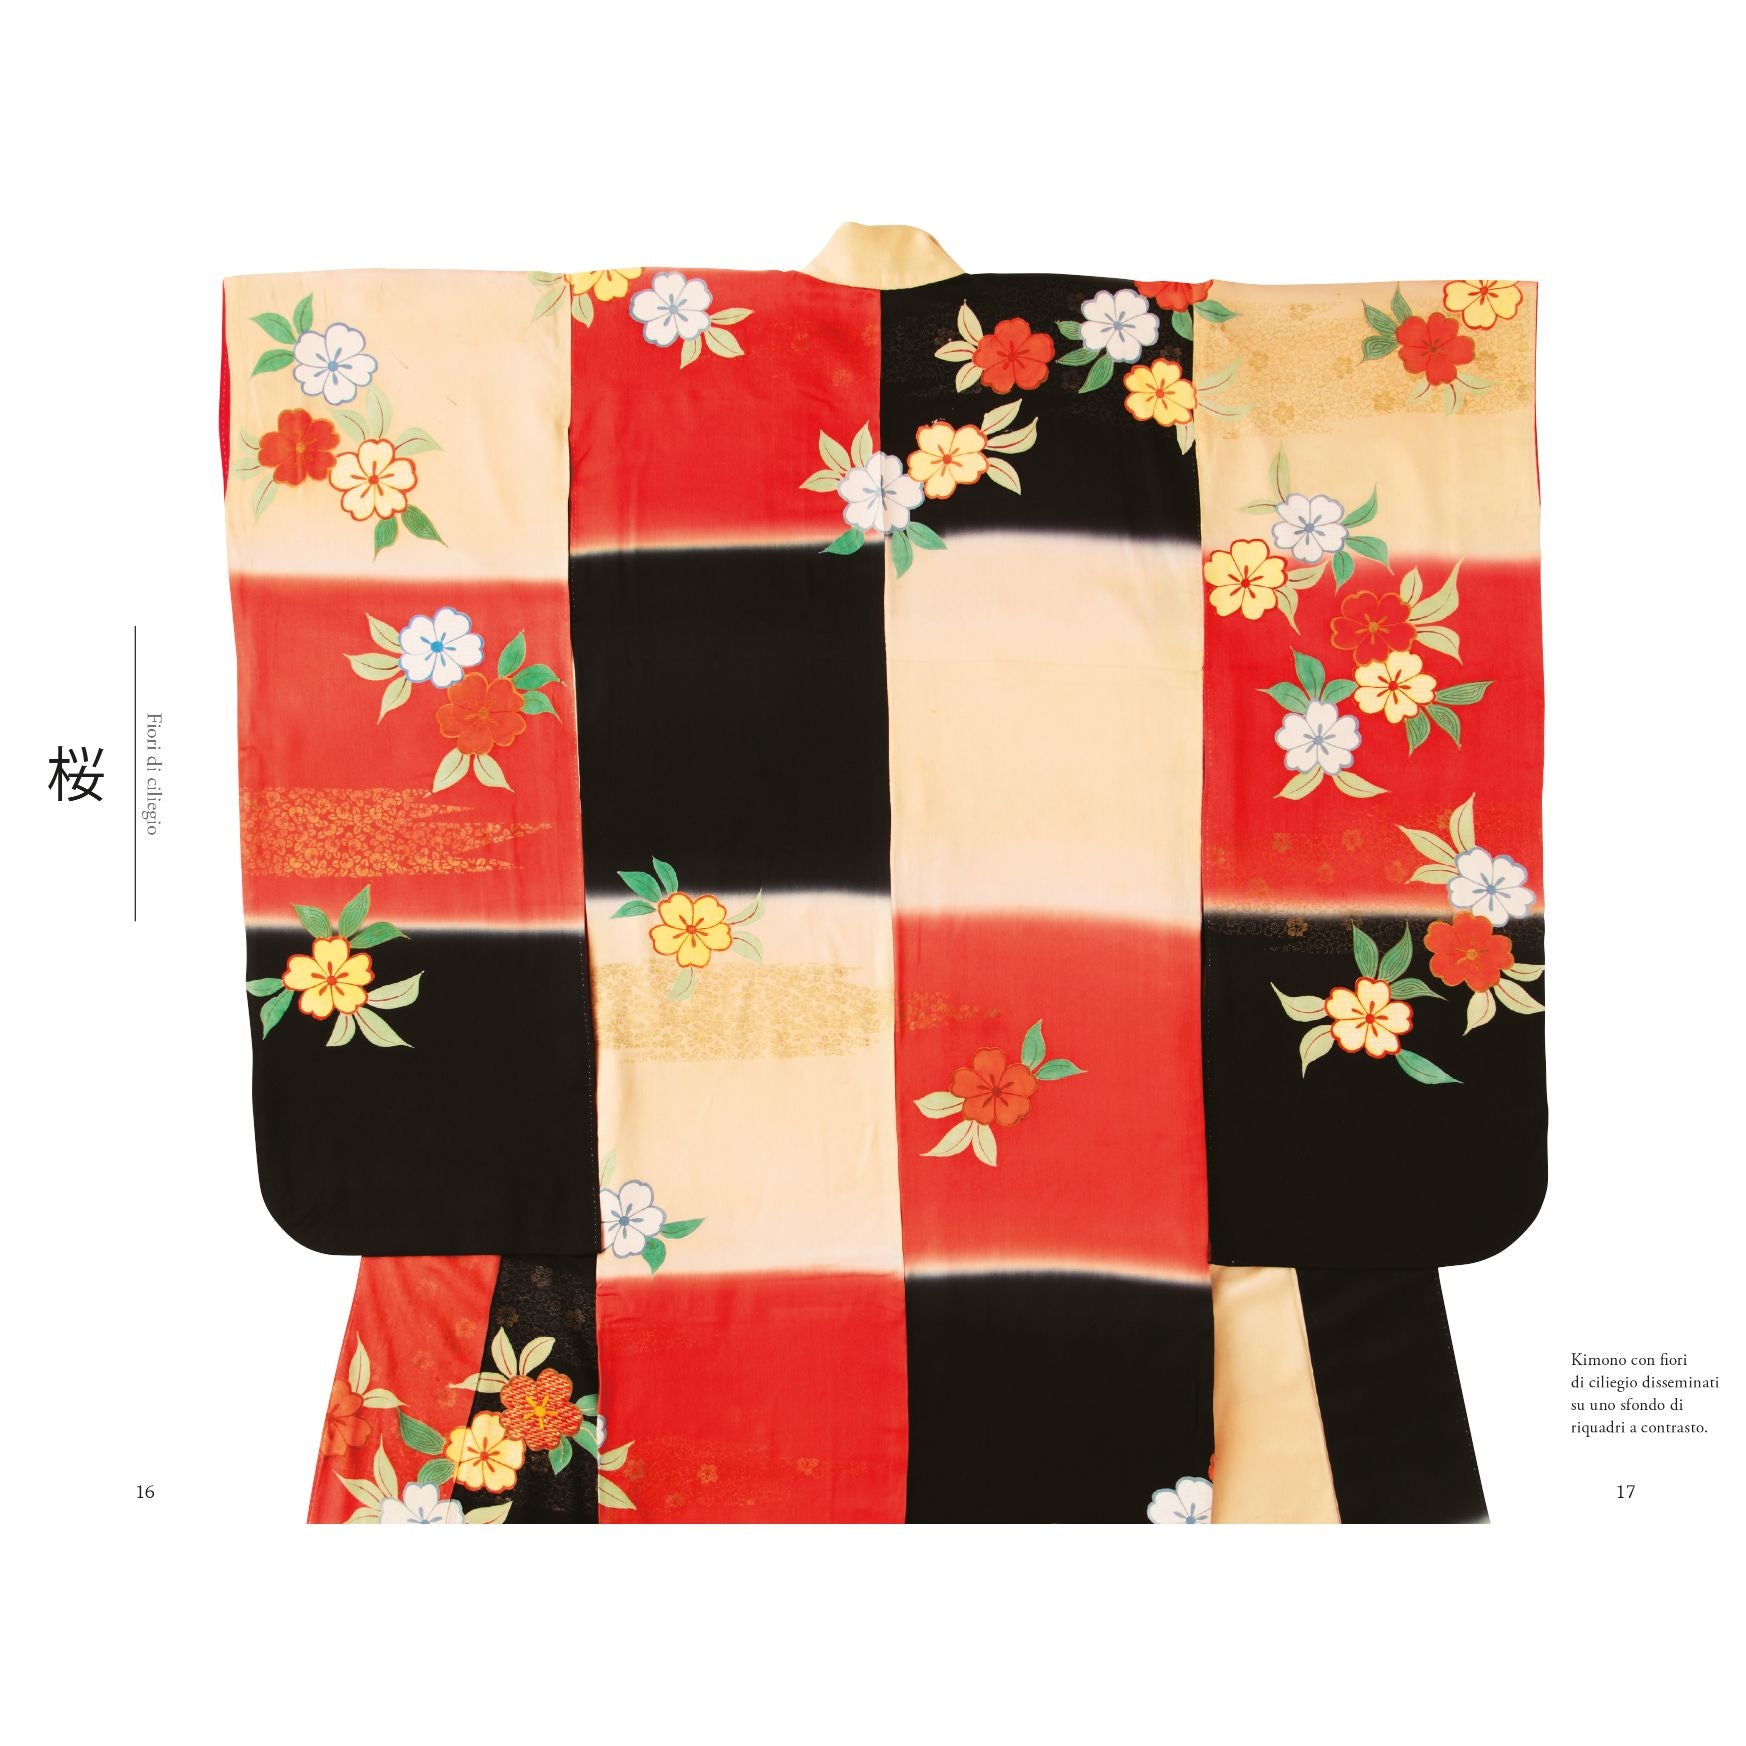 The language of the kimono